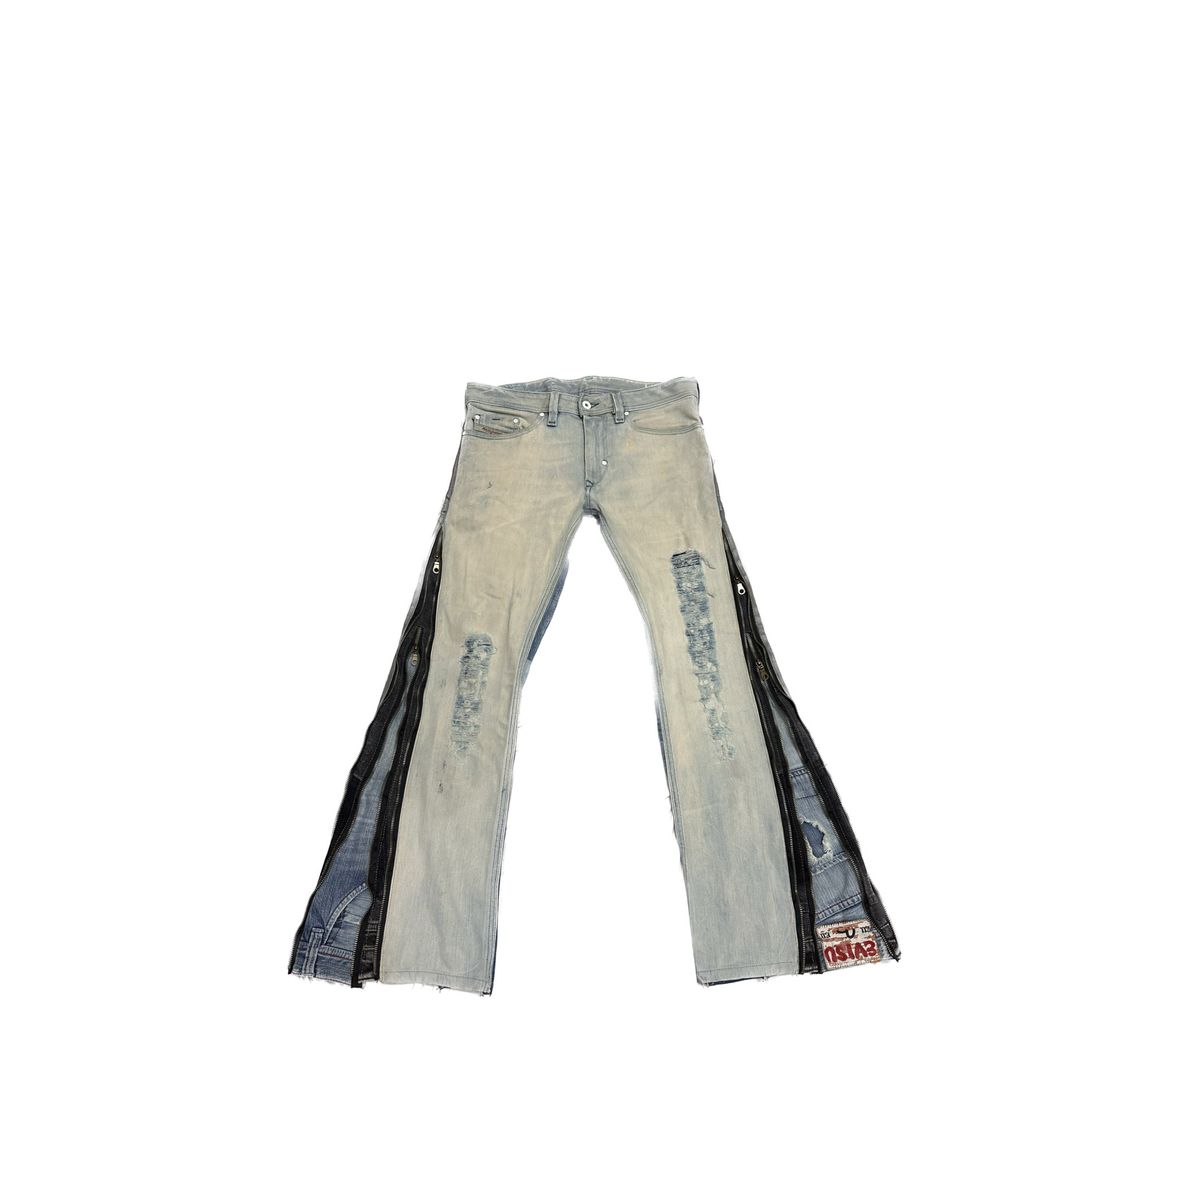 Diesel X Evisu upside down double zipper jeans | HMAD